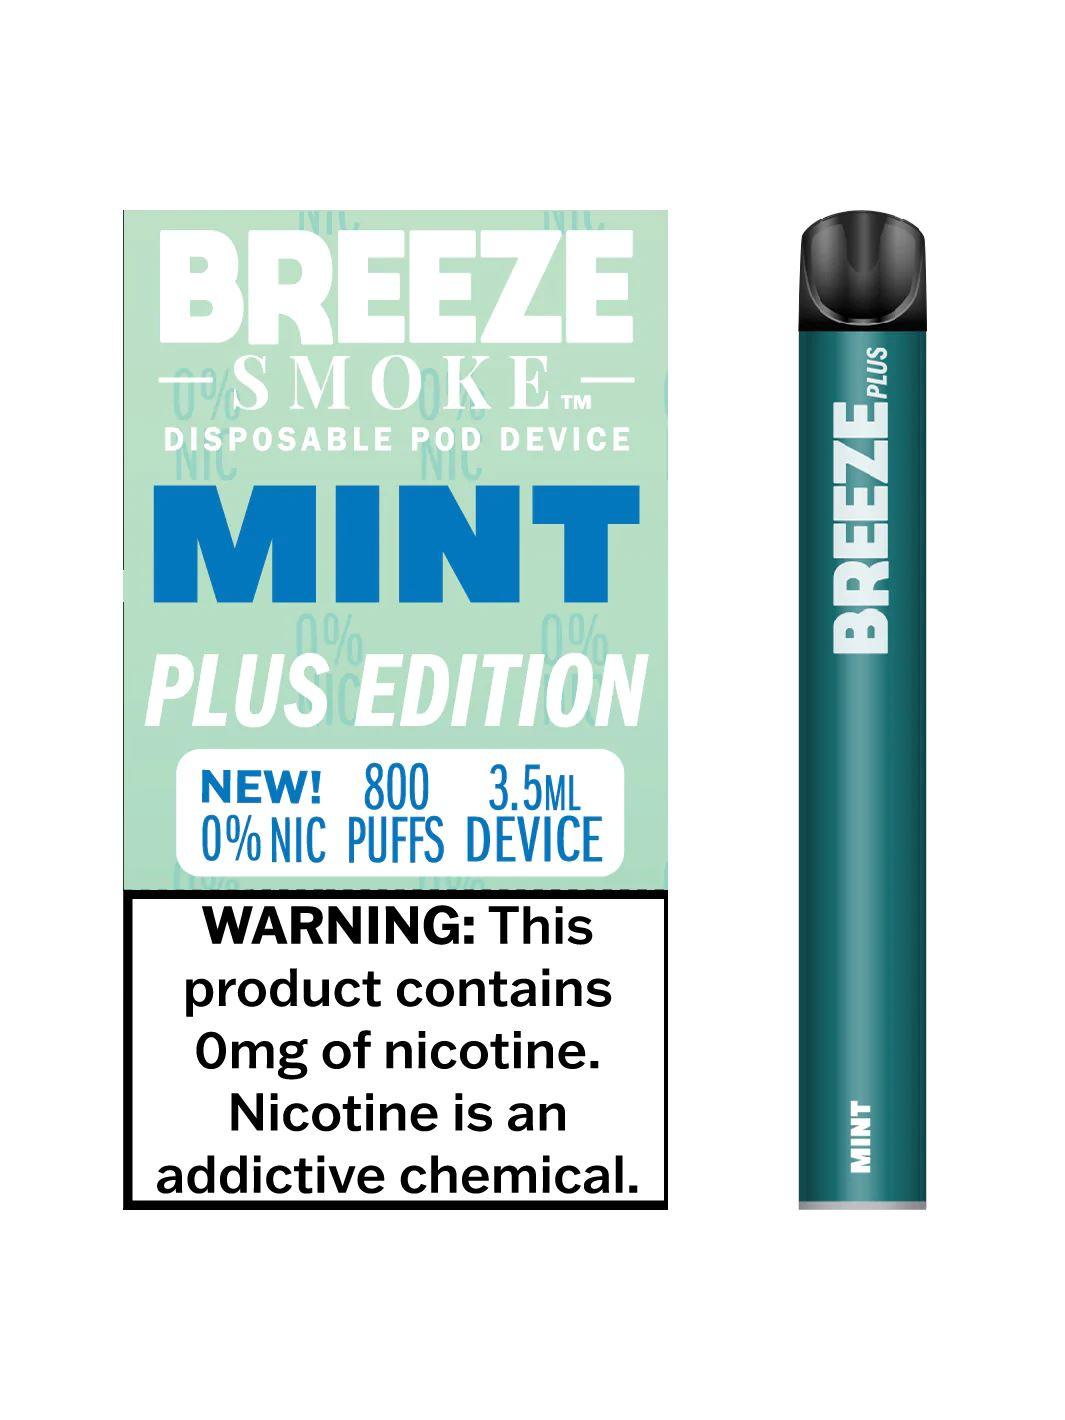 3 Pack Breeze Plus Zero Nicotine Disposable Vape 800 Puffs - Mint